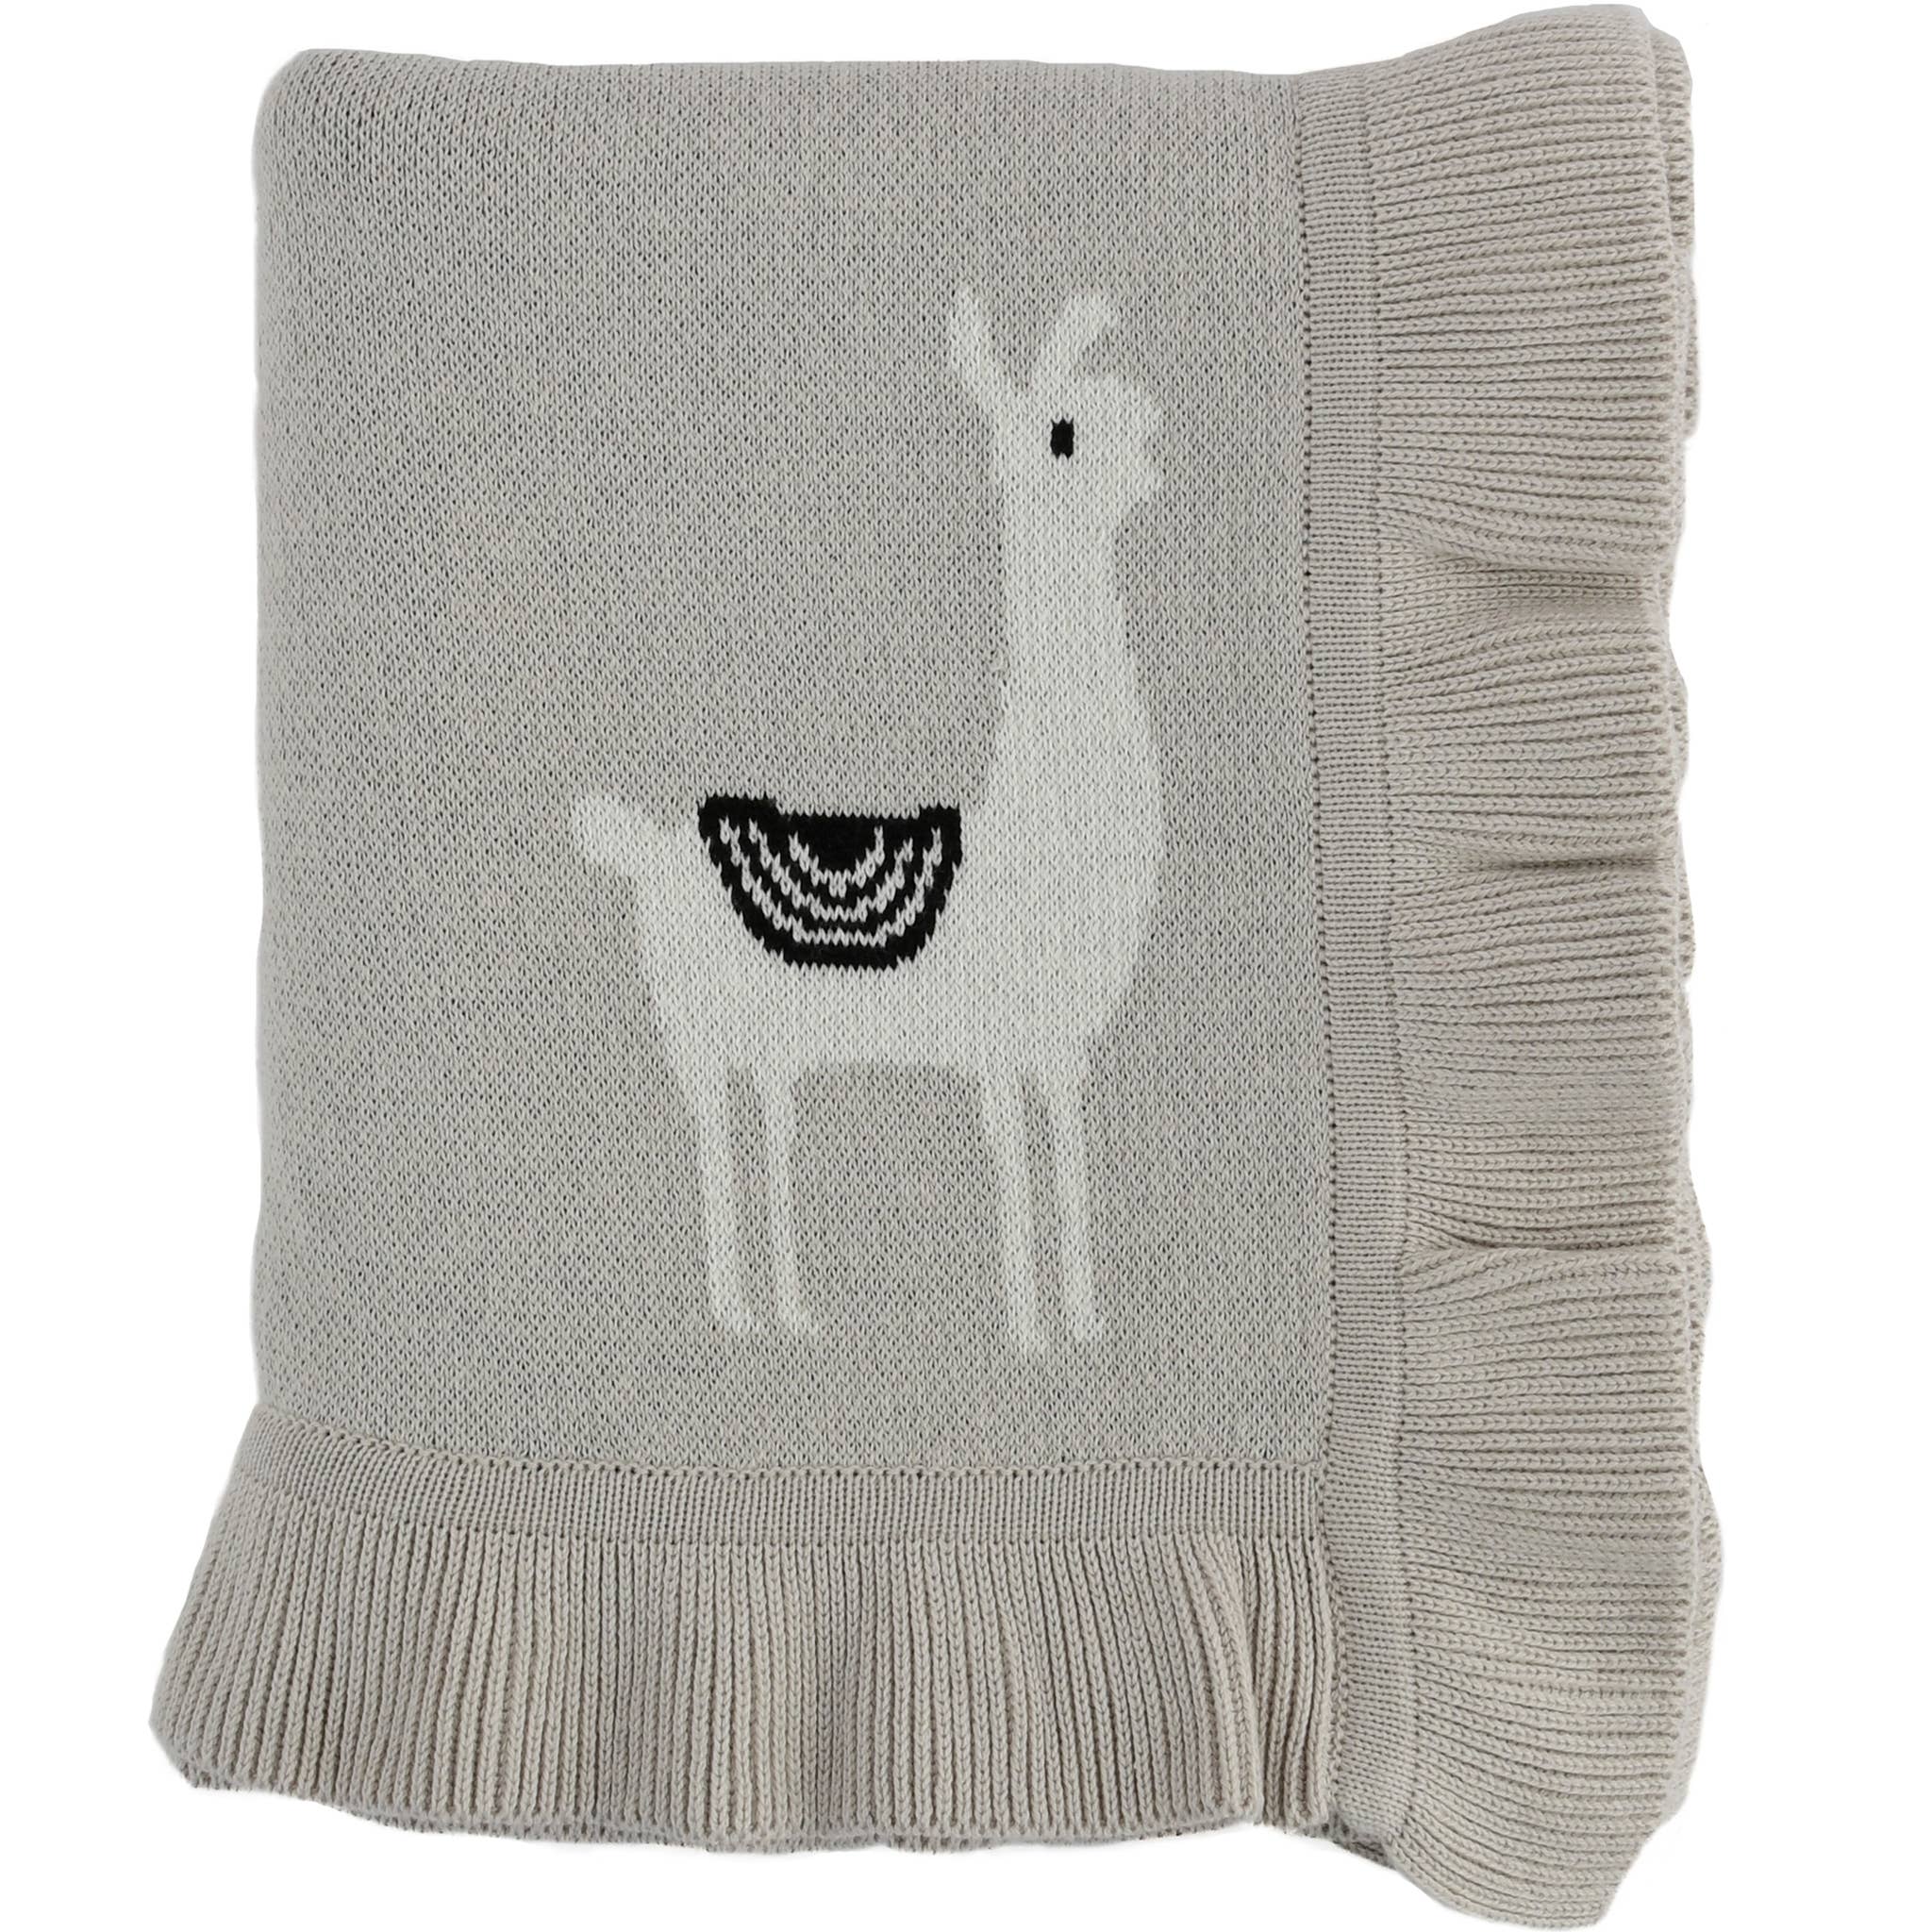 Knit Baby Blanket 